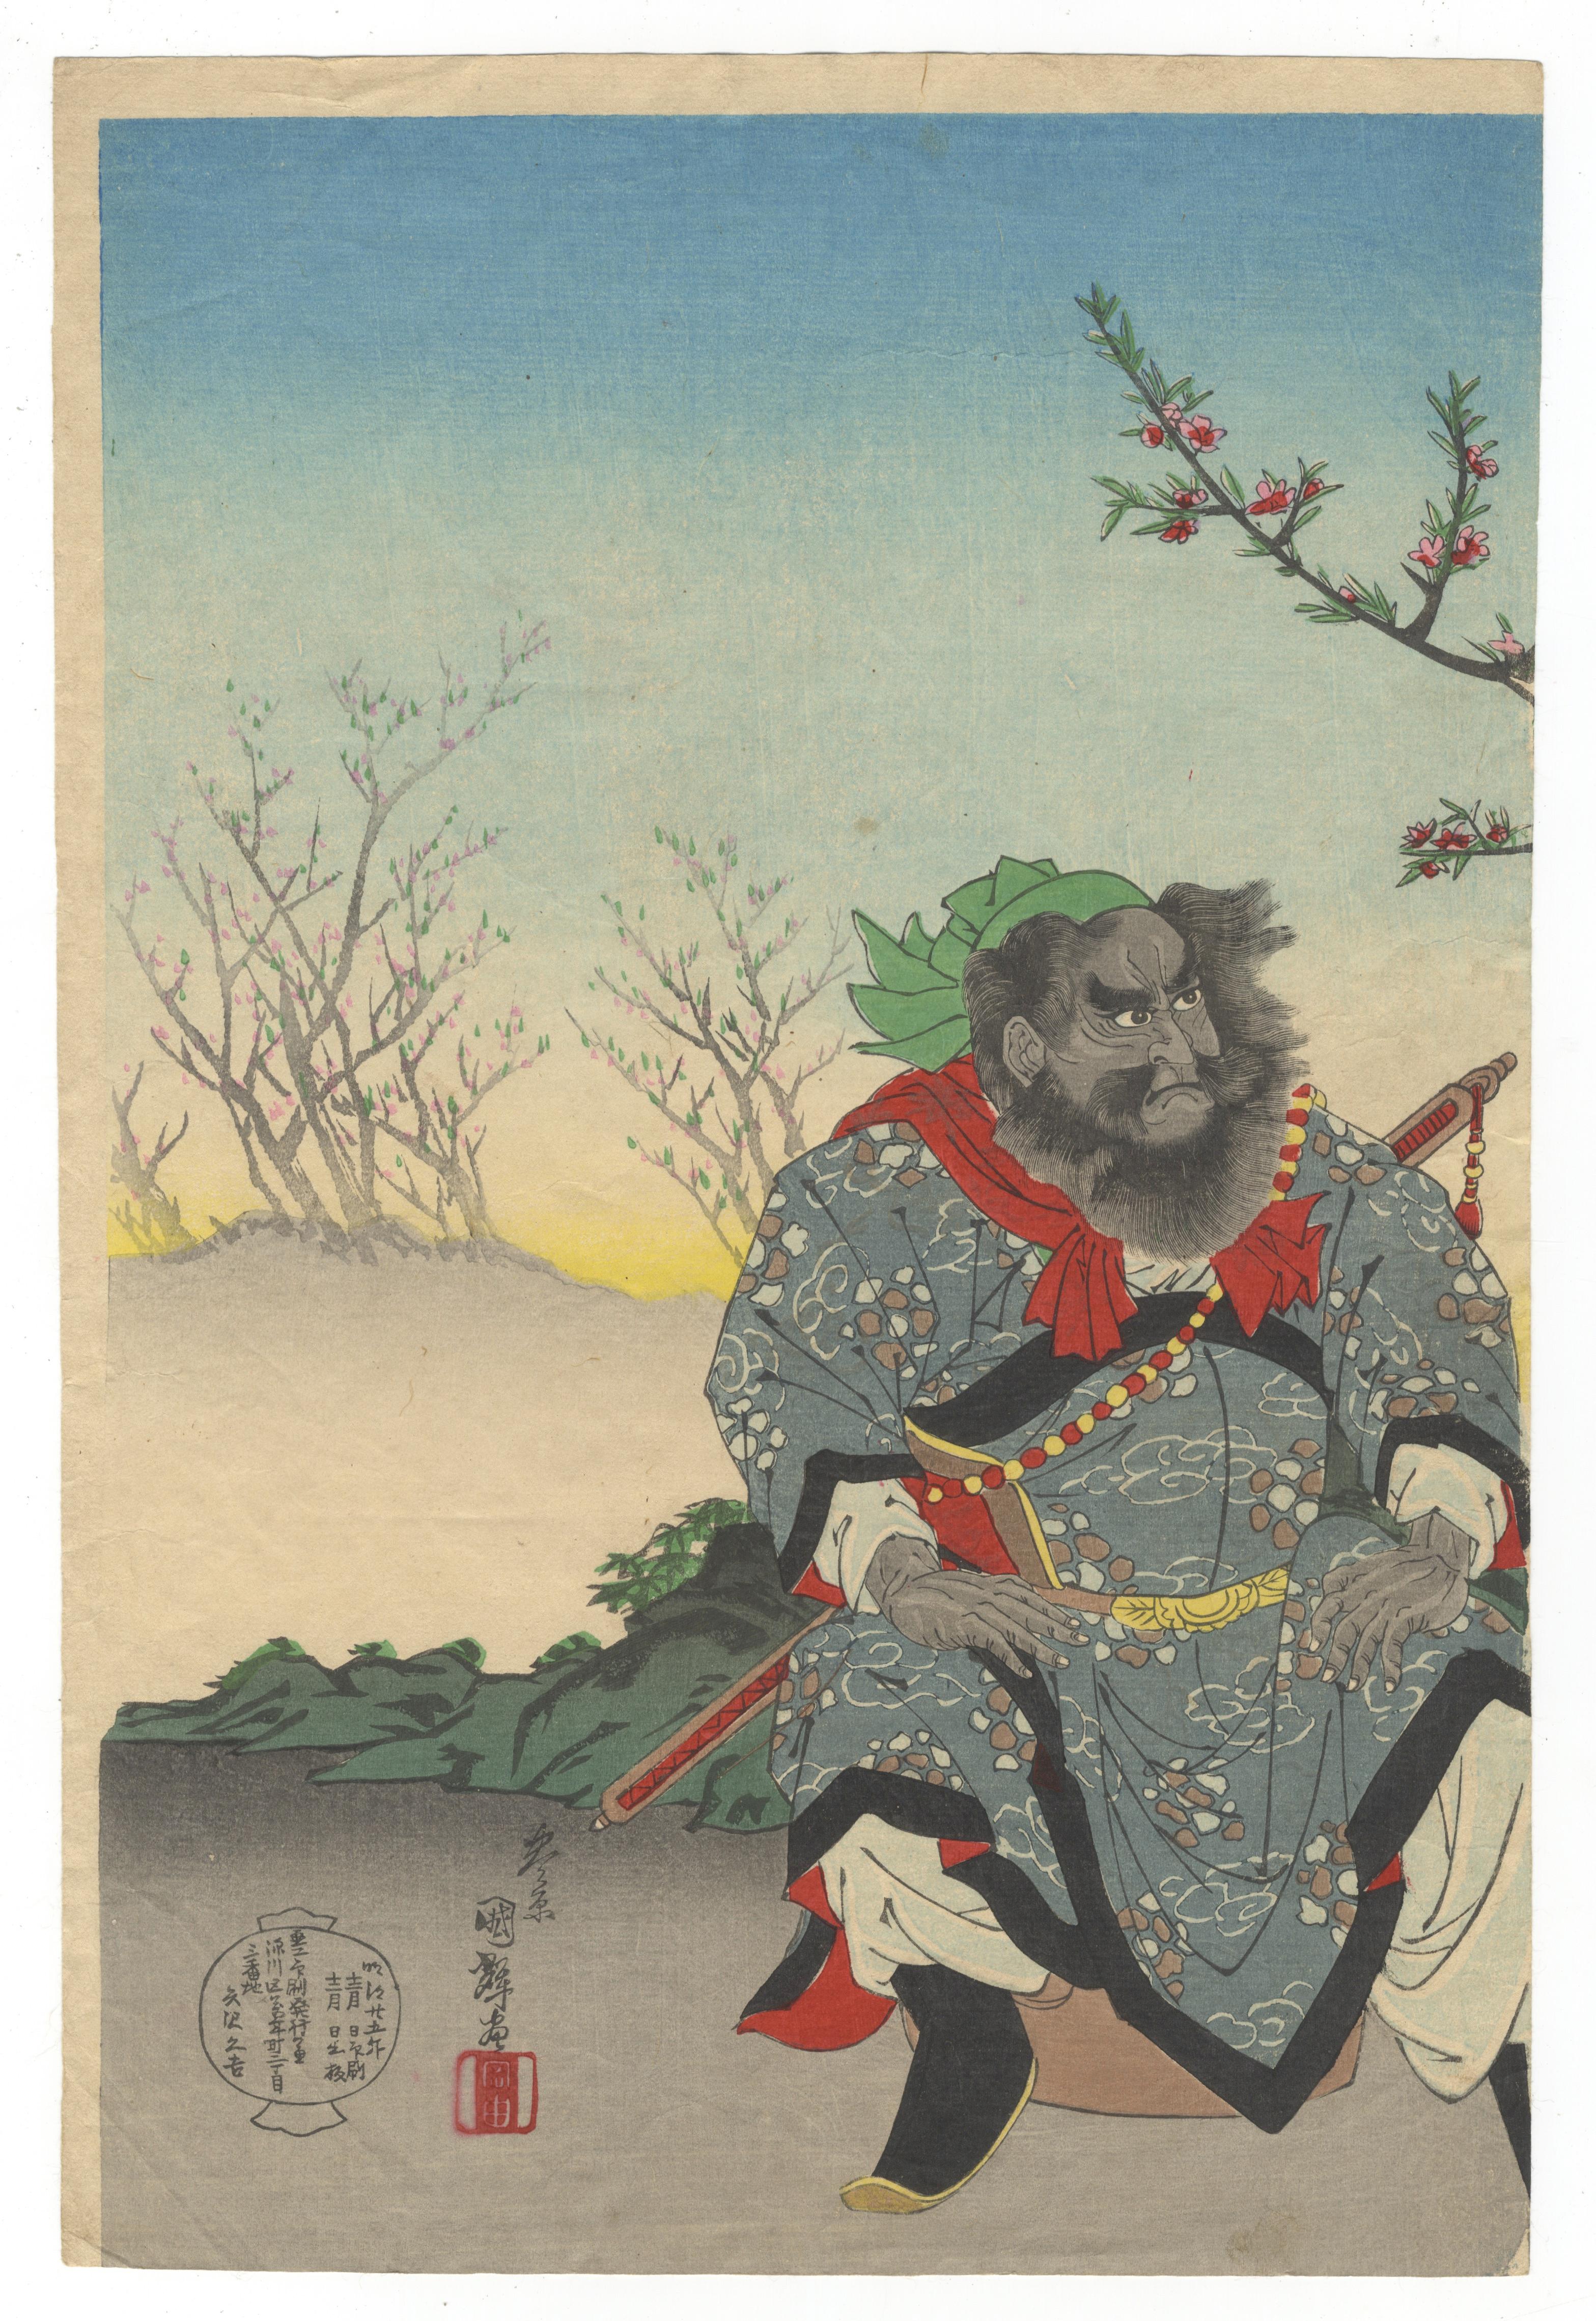 Artist: Kuniteru III Utagawa (active 1886-1895)
Title: Peach Garden Oath from Three Kingdoms
Publisher: Yazawa Hisakichi
Date: 1892
Size: (L) 36.8 x 24.9, (C) 36.9 x 24.8, (R) 36.9 x 24.7 cm
Condition report: Minor spots and stains, creases.

The